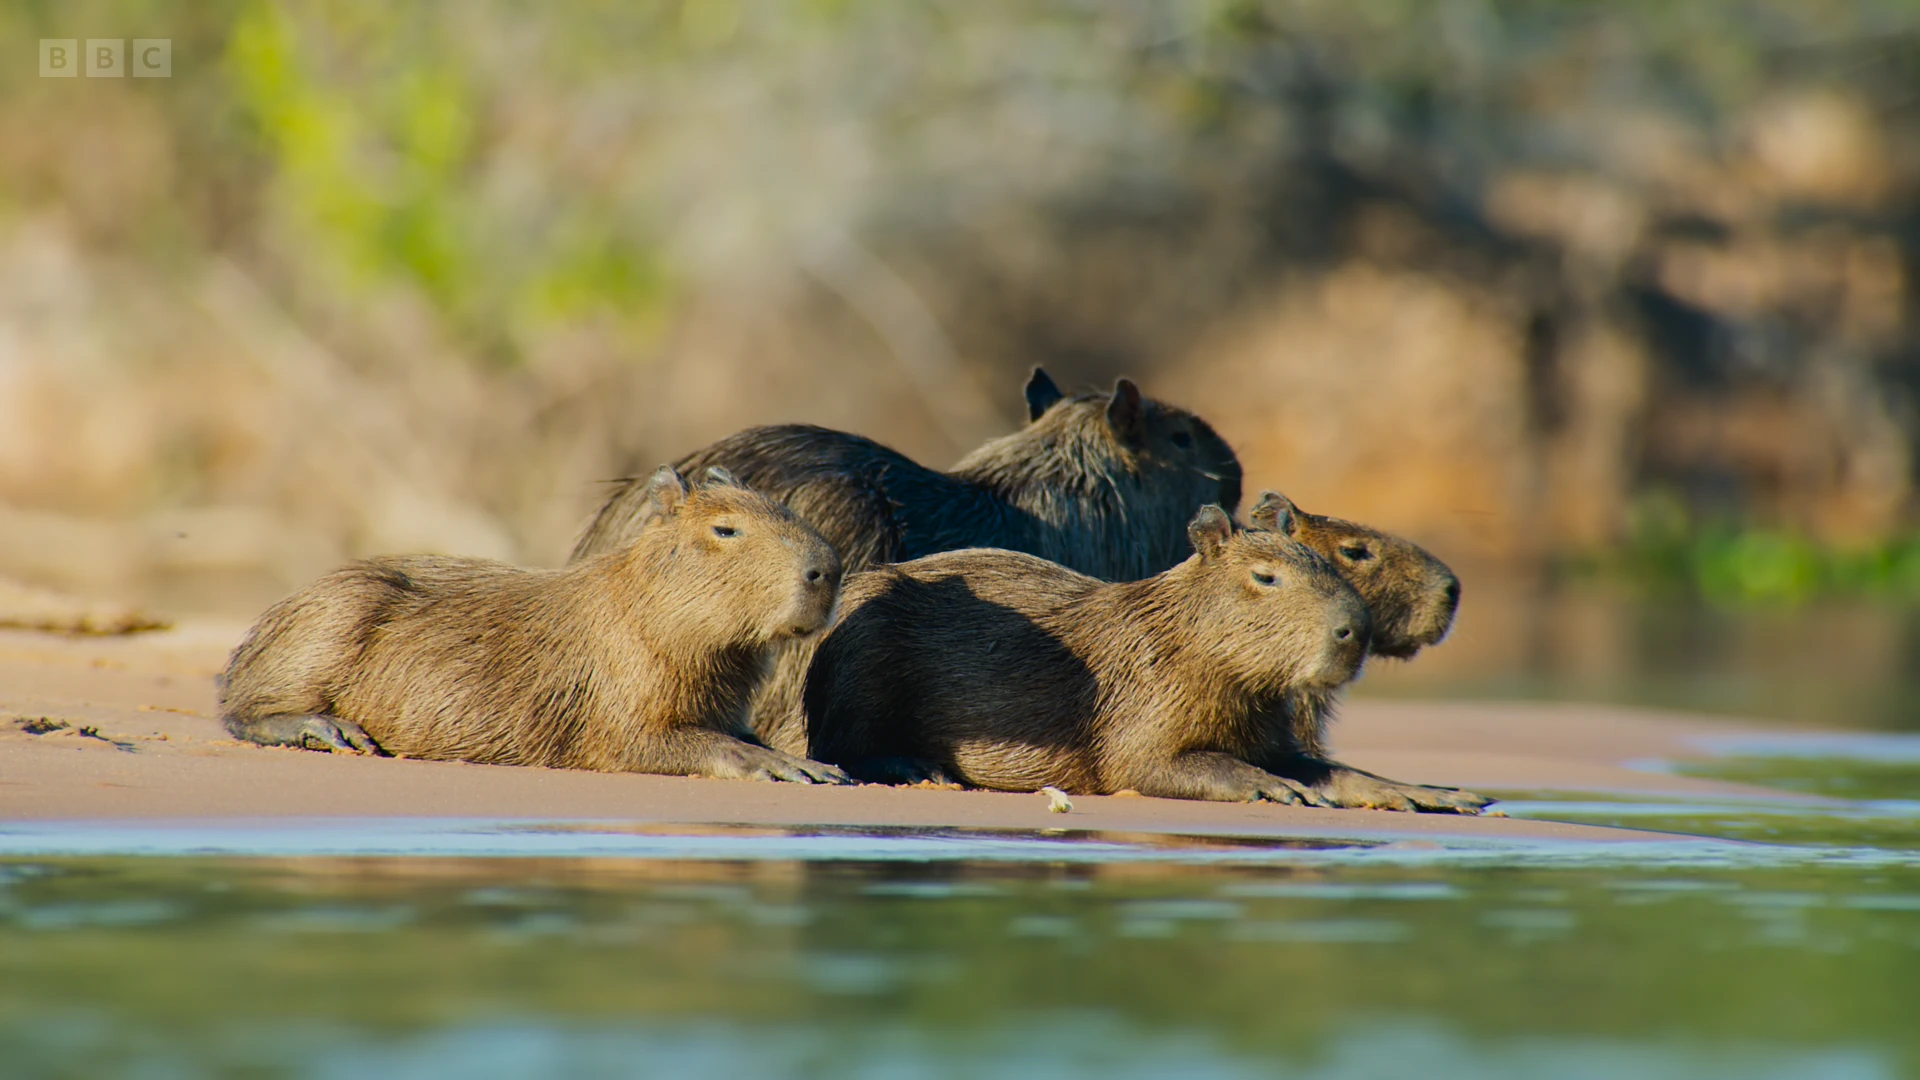 Capybara (Hydrochoerus hydrochaeris) as shown in Planet Earth II - Jungles